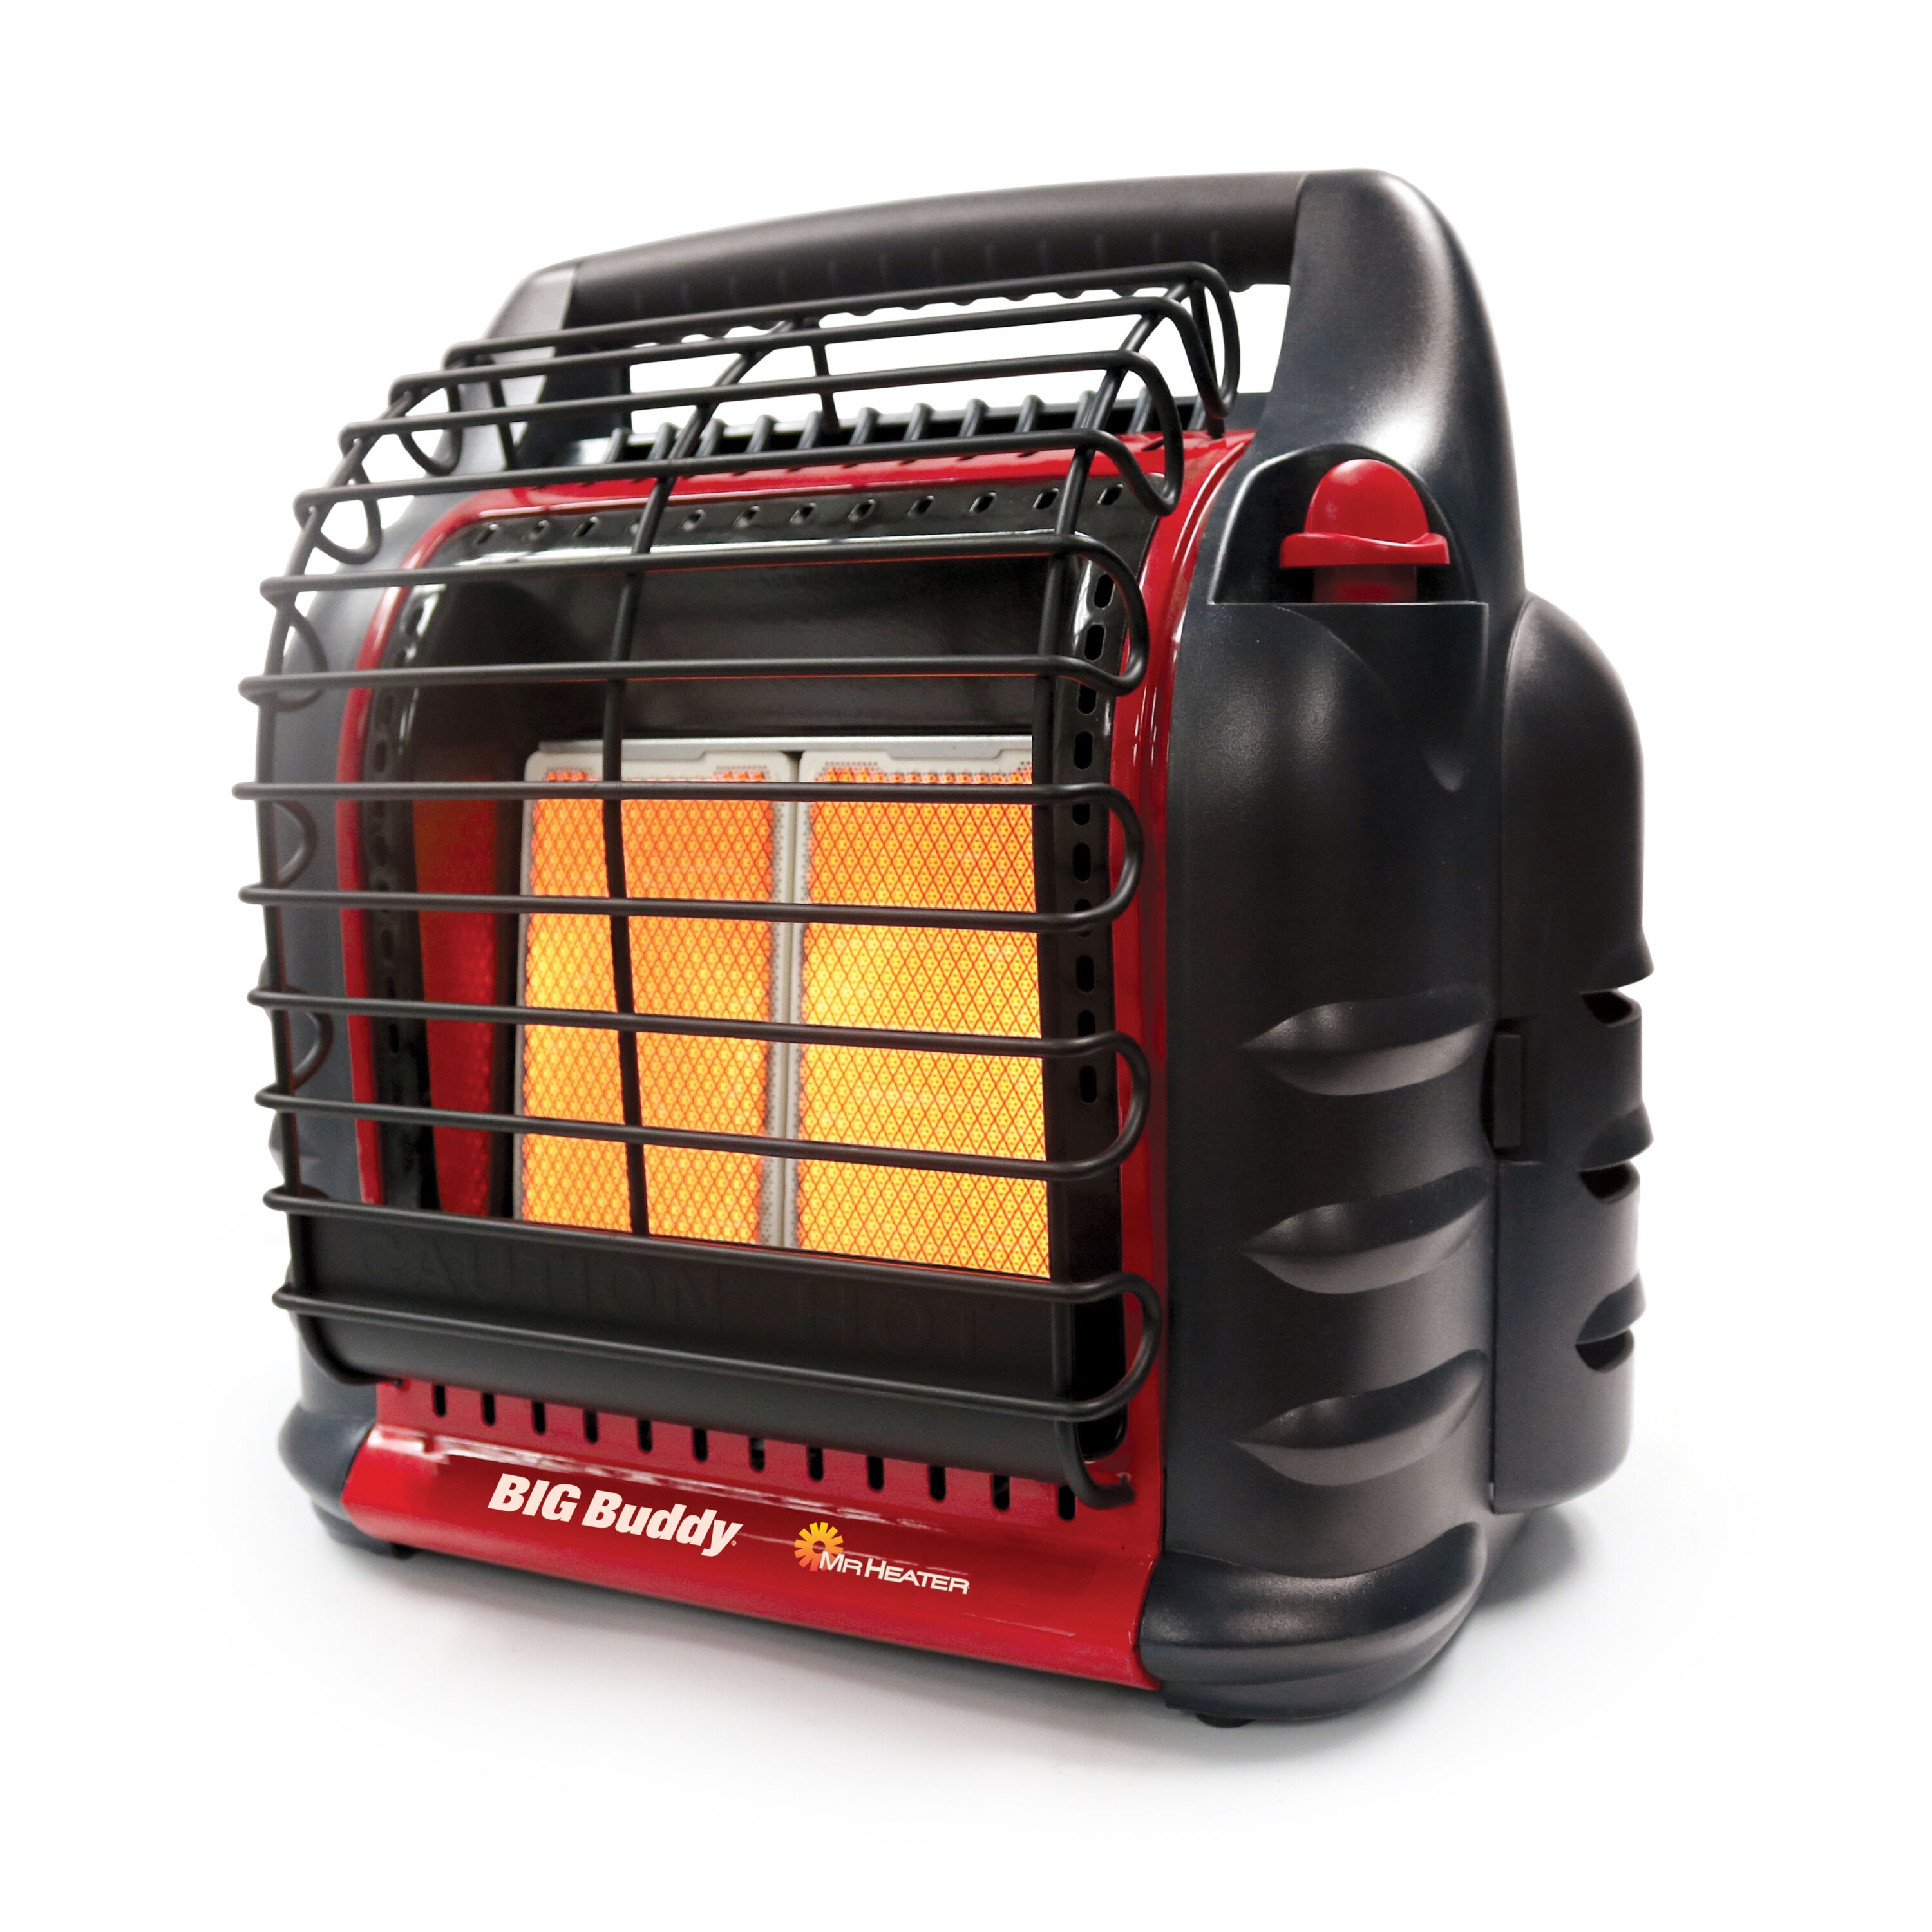 Buddy heater 18000-BTU Outdoor Portable Radiant Propane Heater in Black | - Mr. Heater MH18B